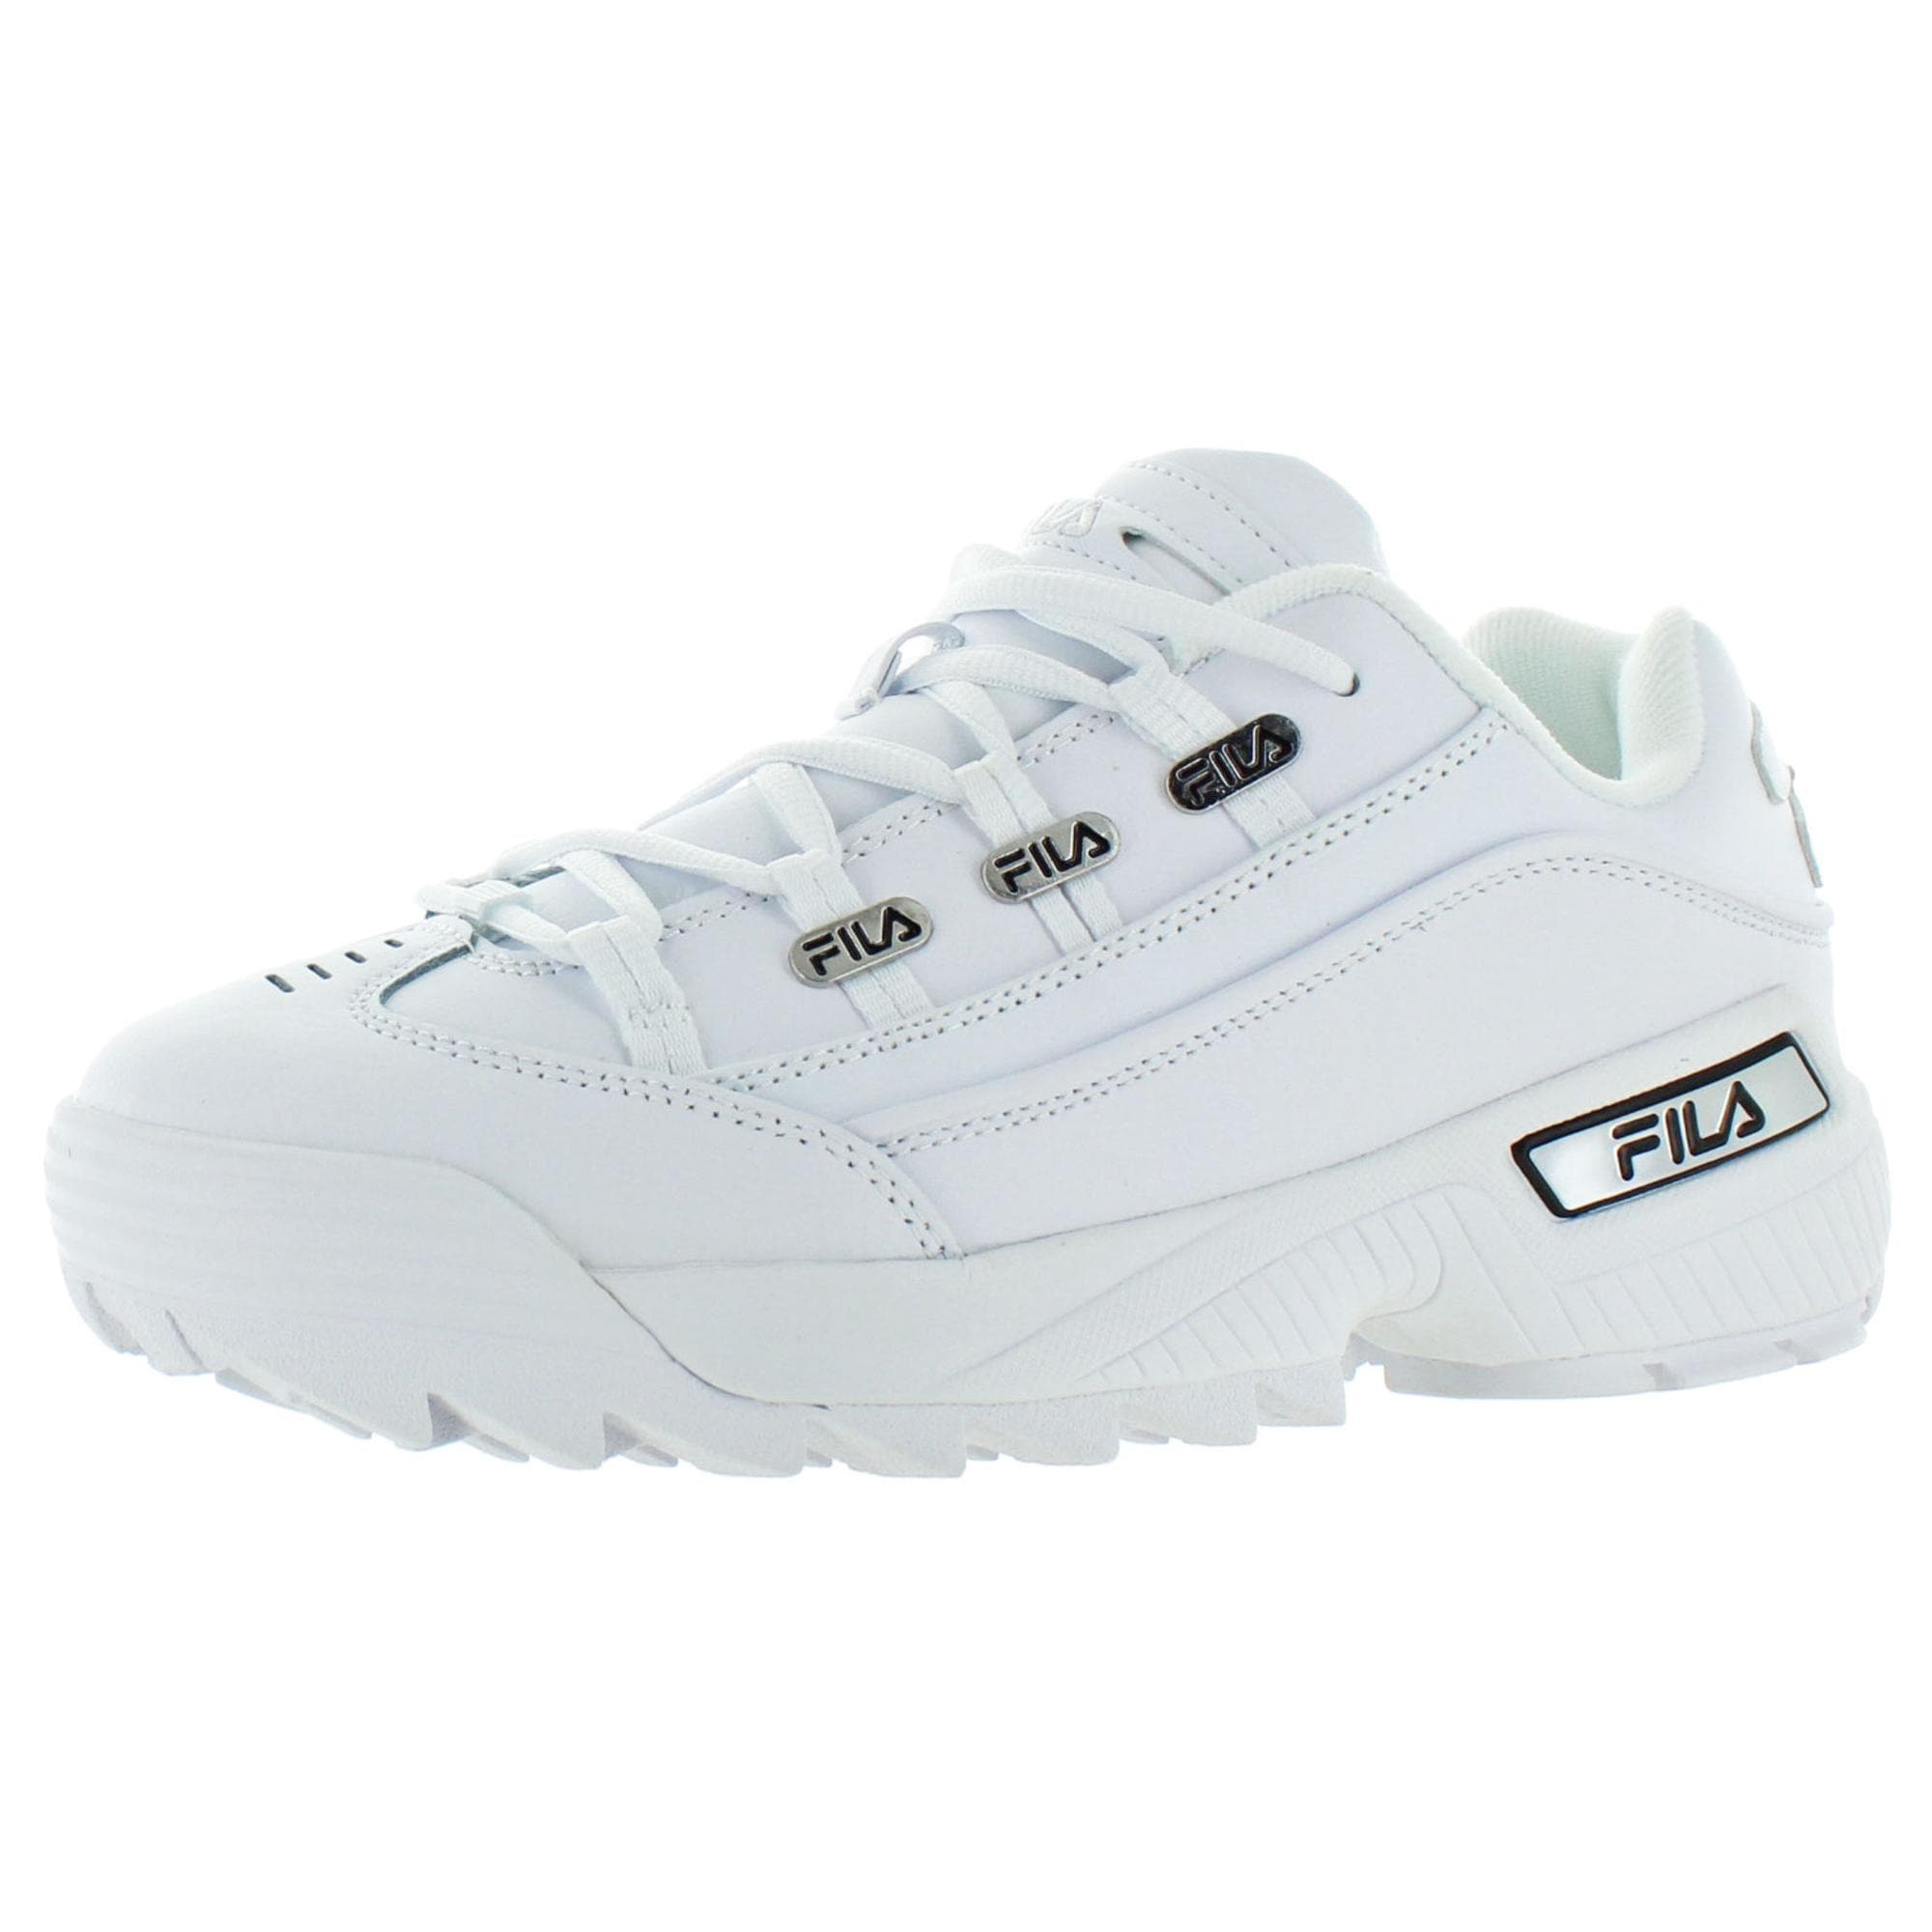 white fila mens shoes